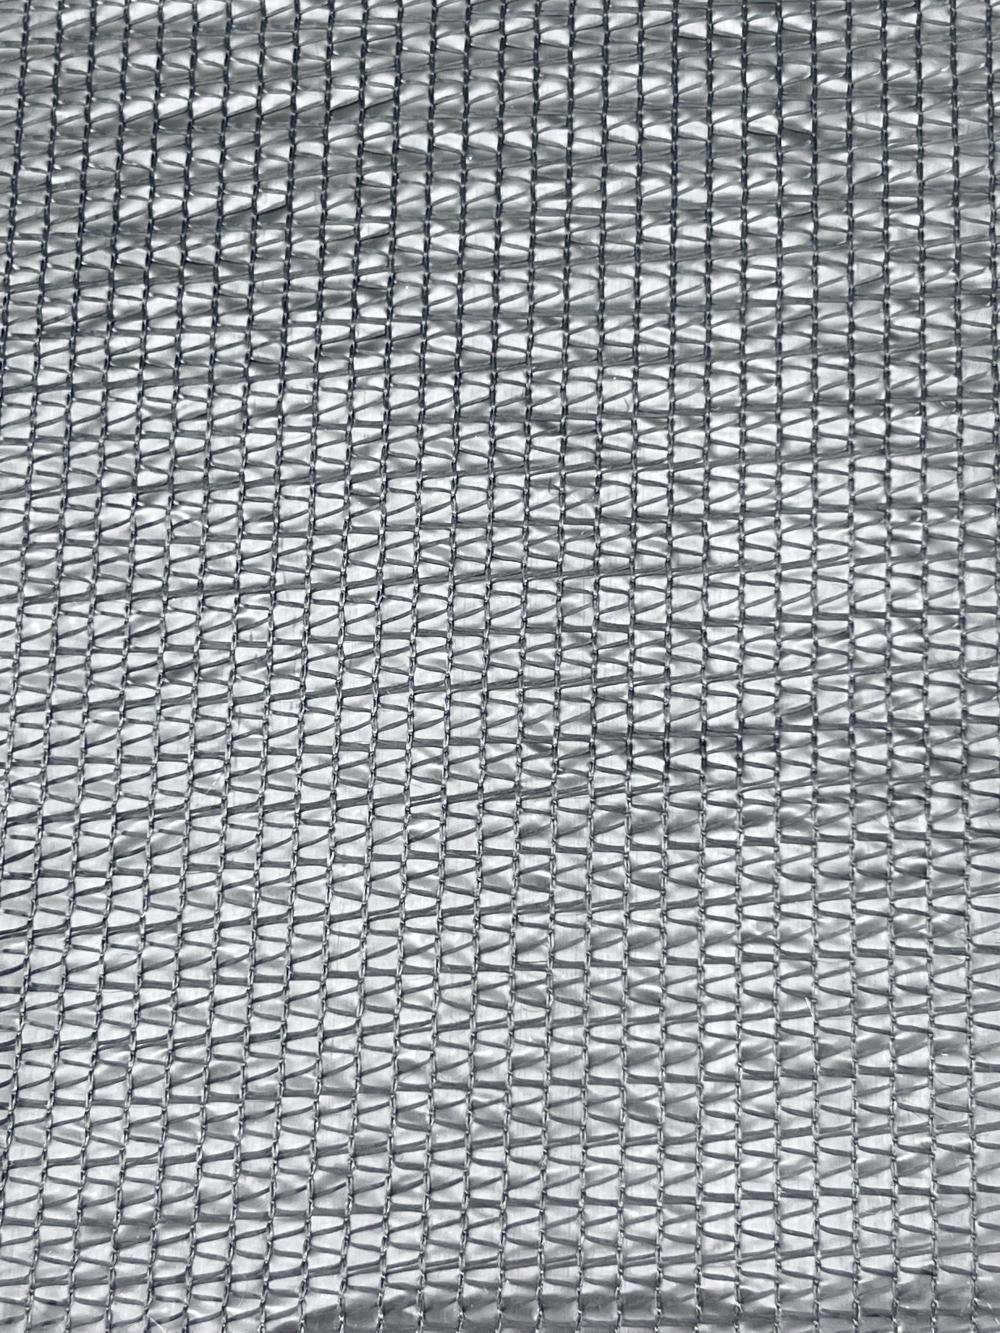 Aluminum Foil Shade Cloth Black-White Screen